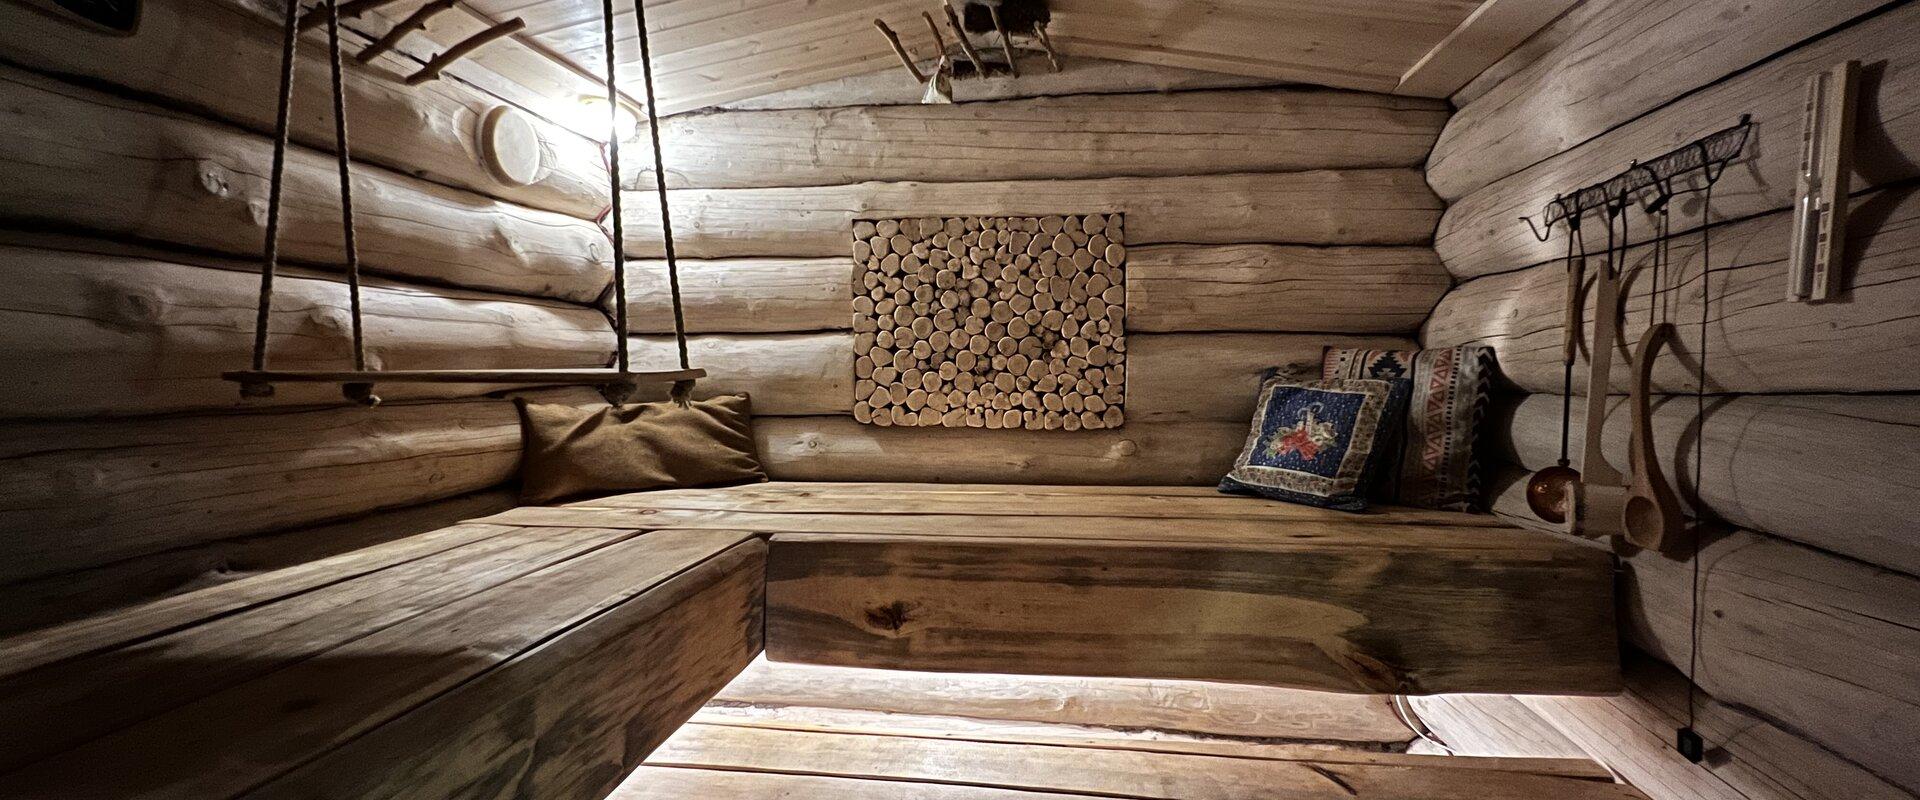 Metsakuurort's Russian sauna